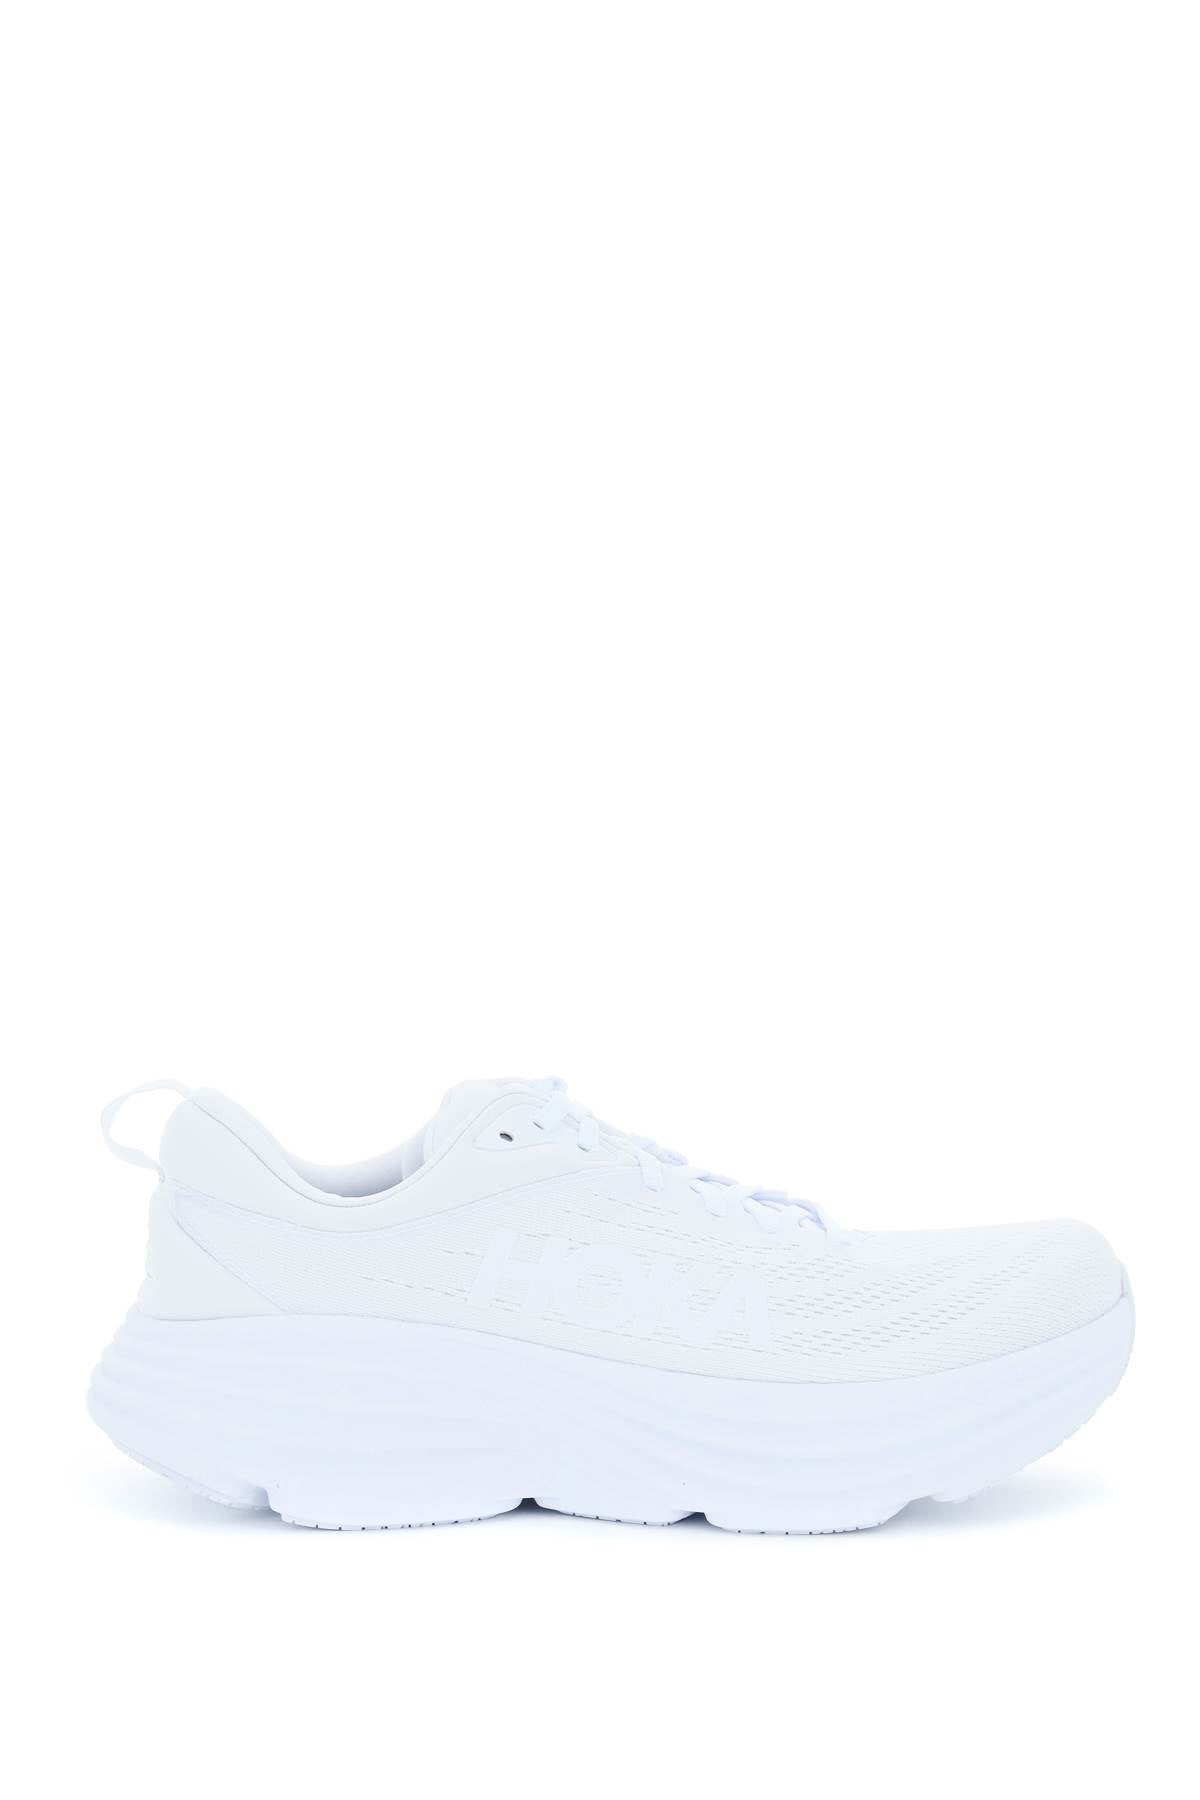 Hoka bondi 8 sneakers 1123202 WHITE WHITE